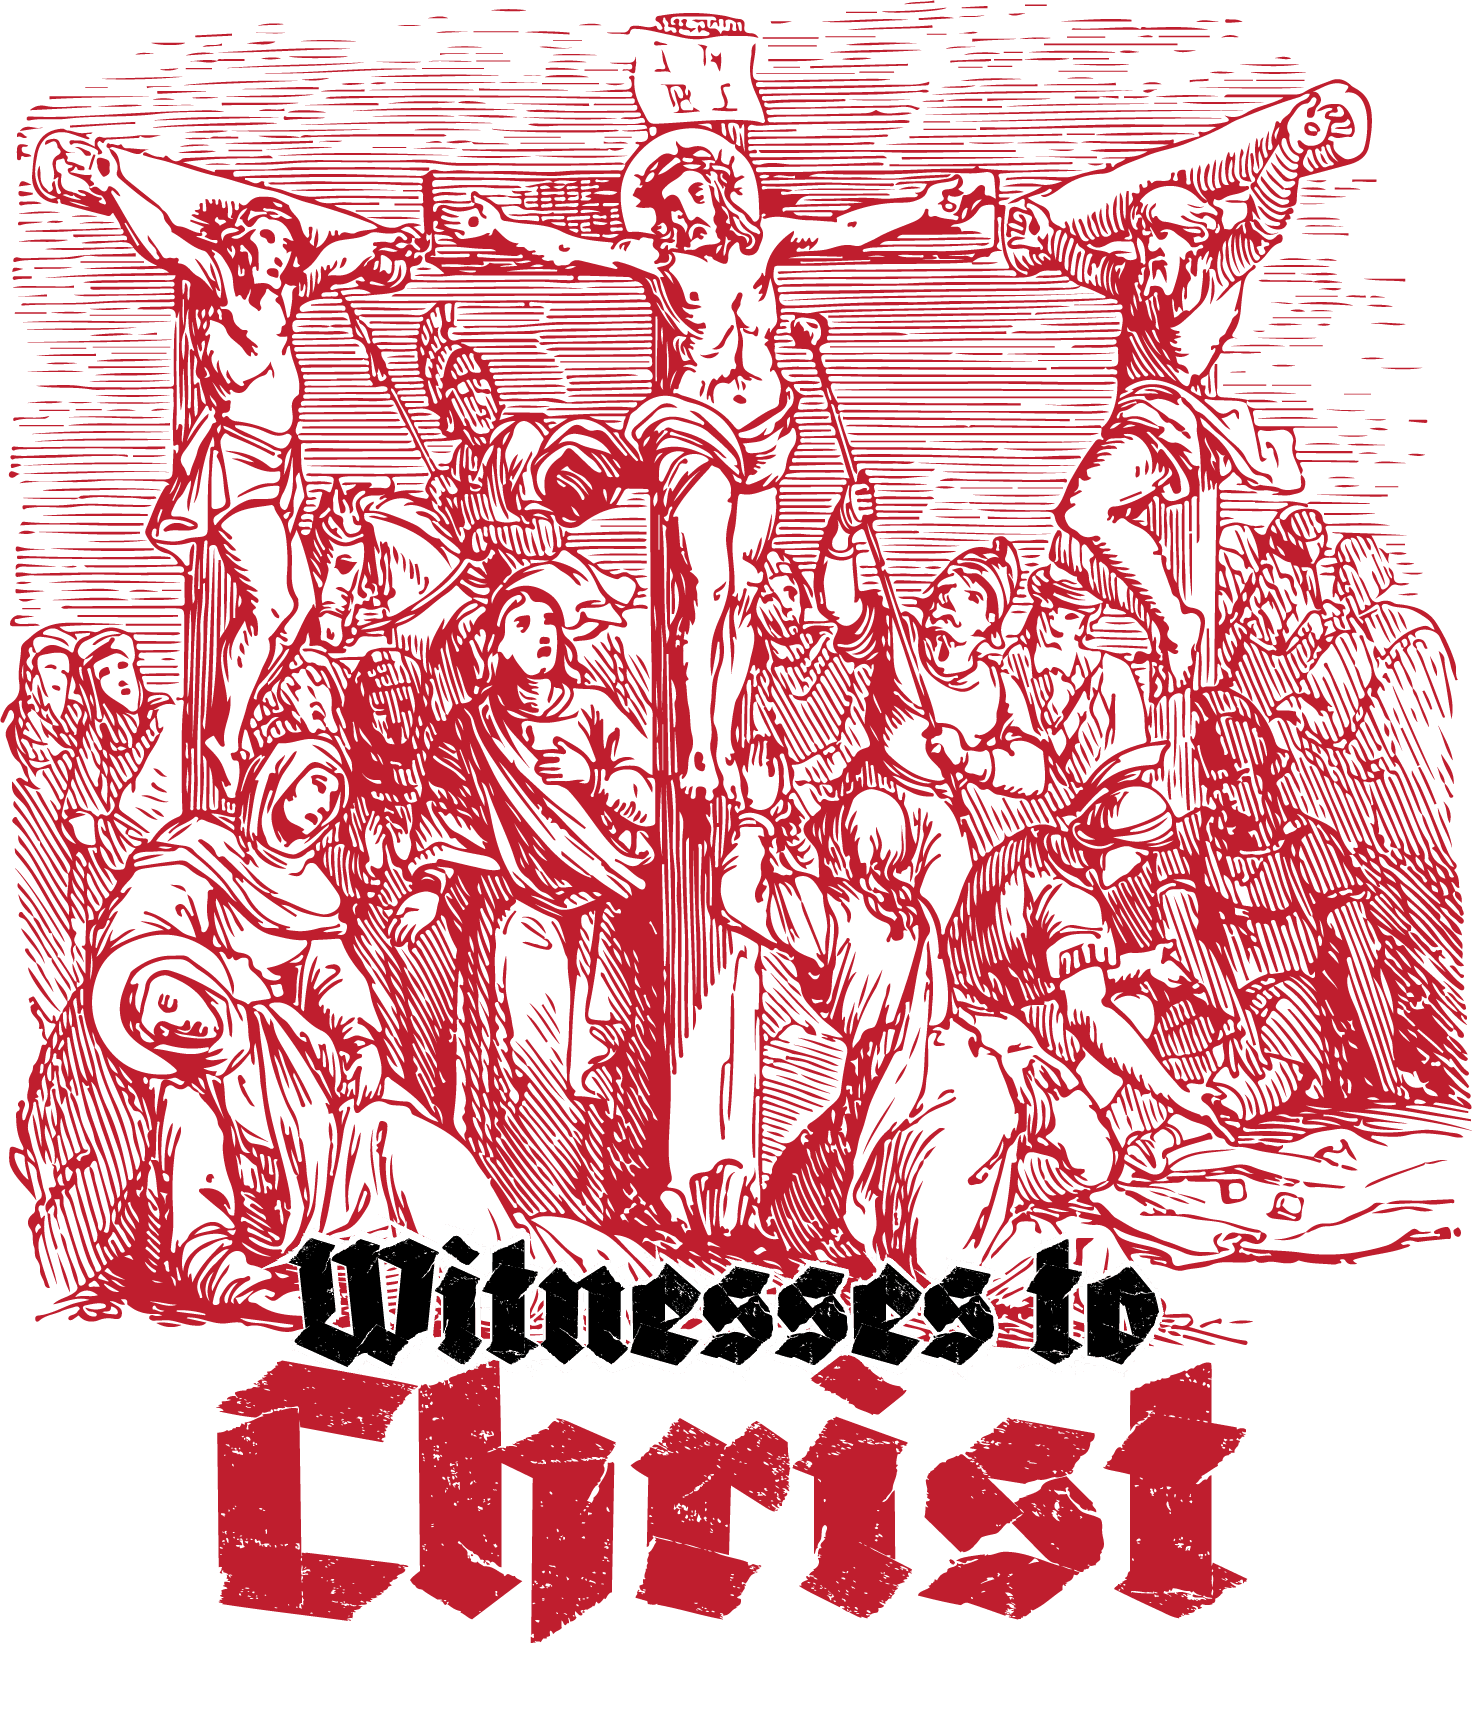 Witnesses to Christ – Barabbas